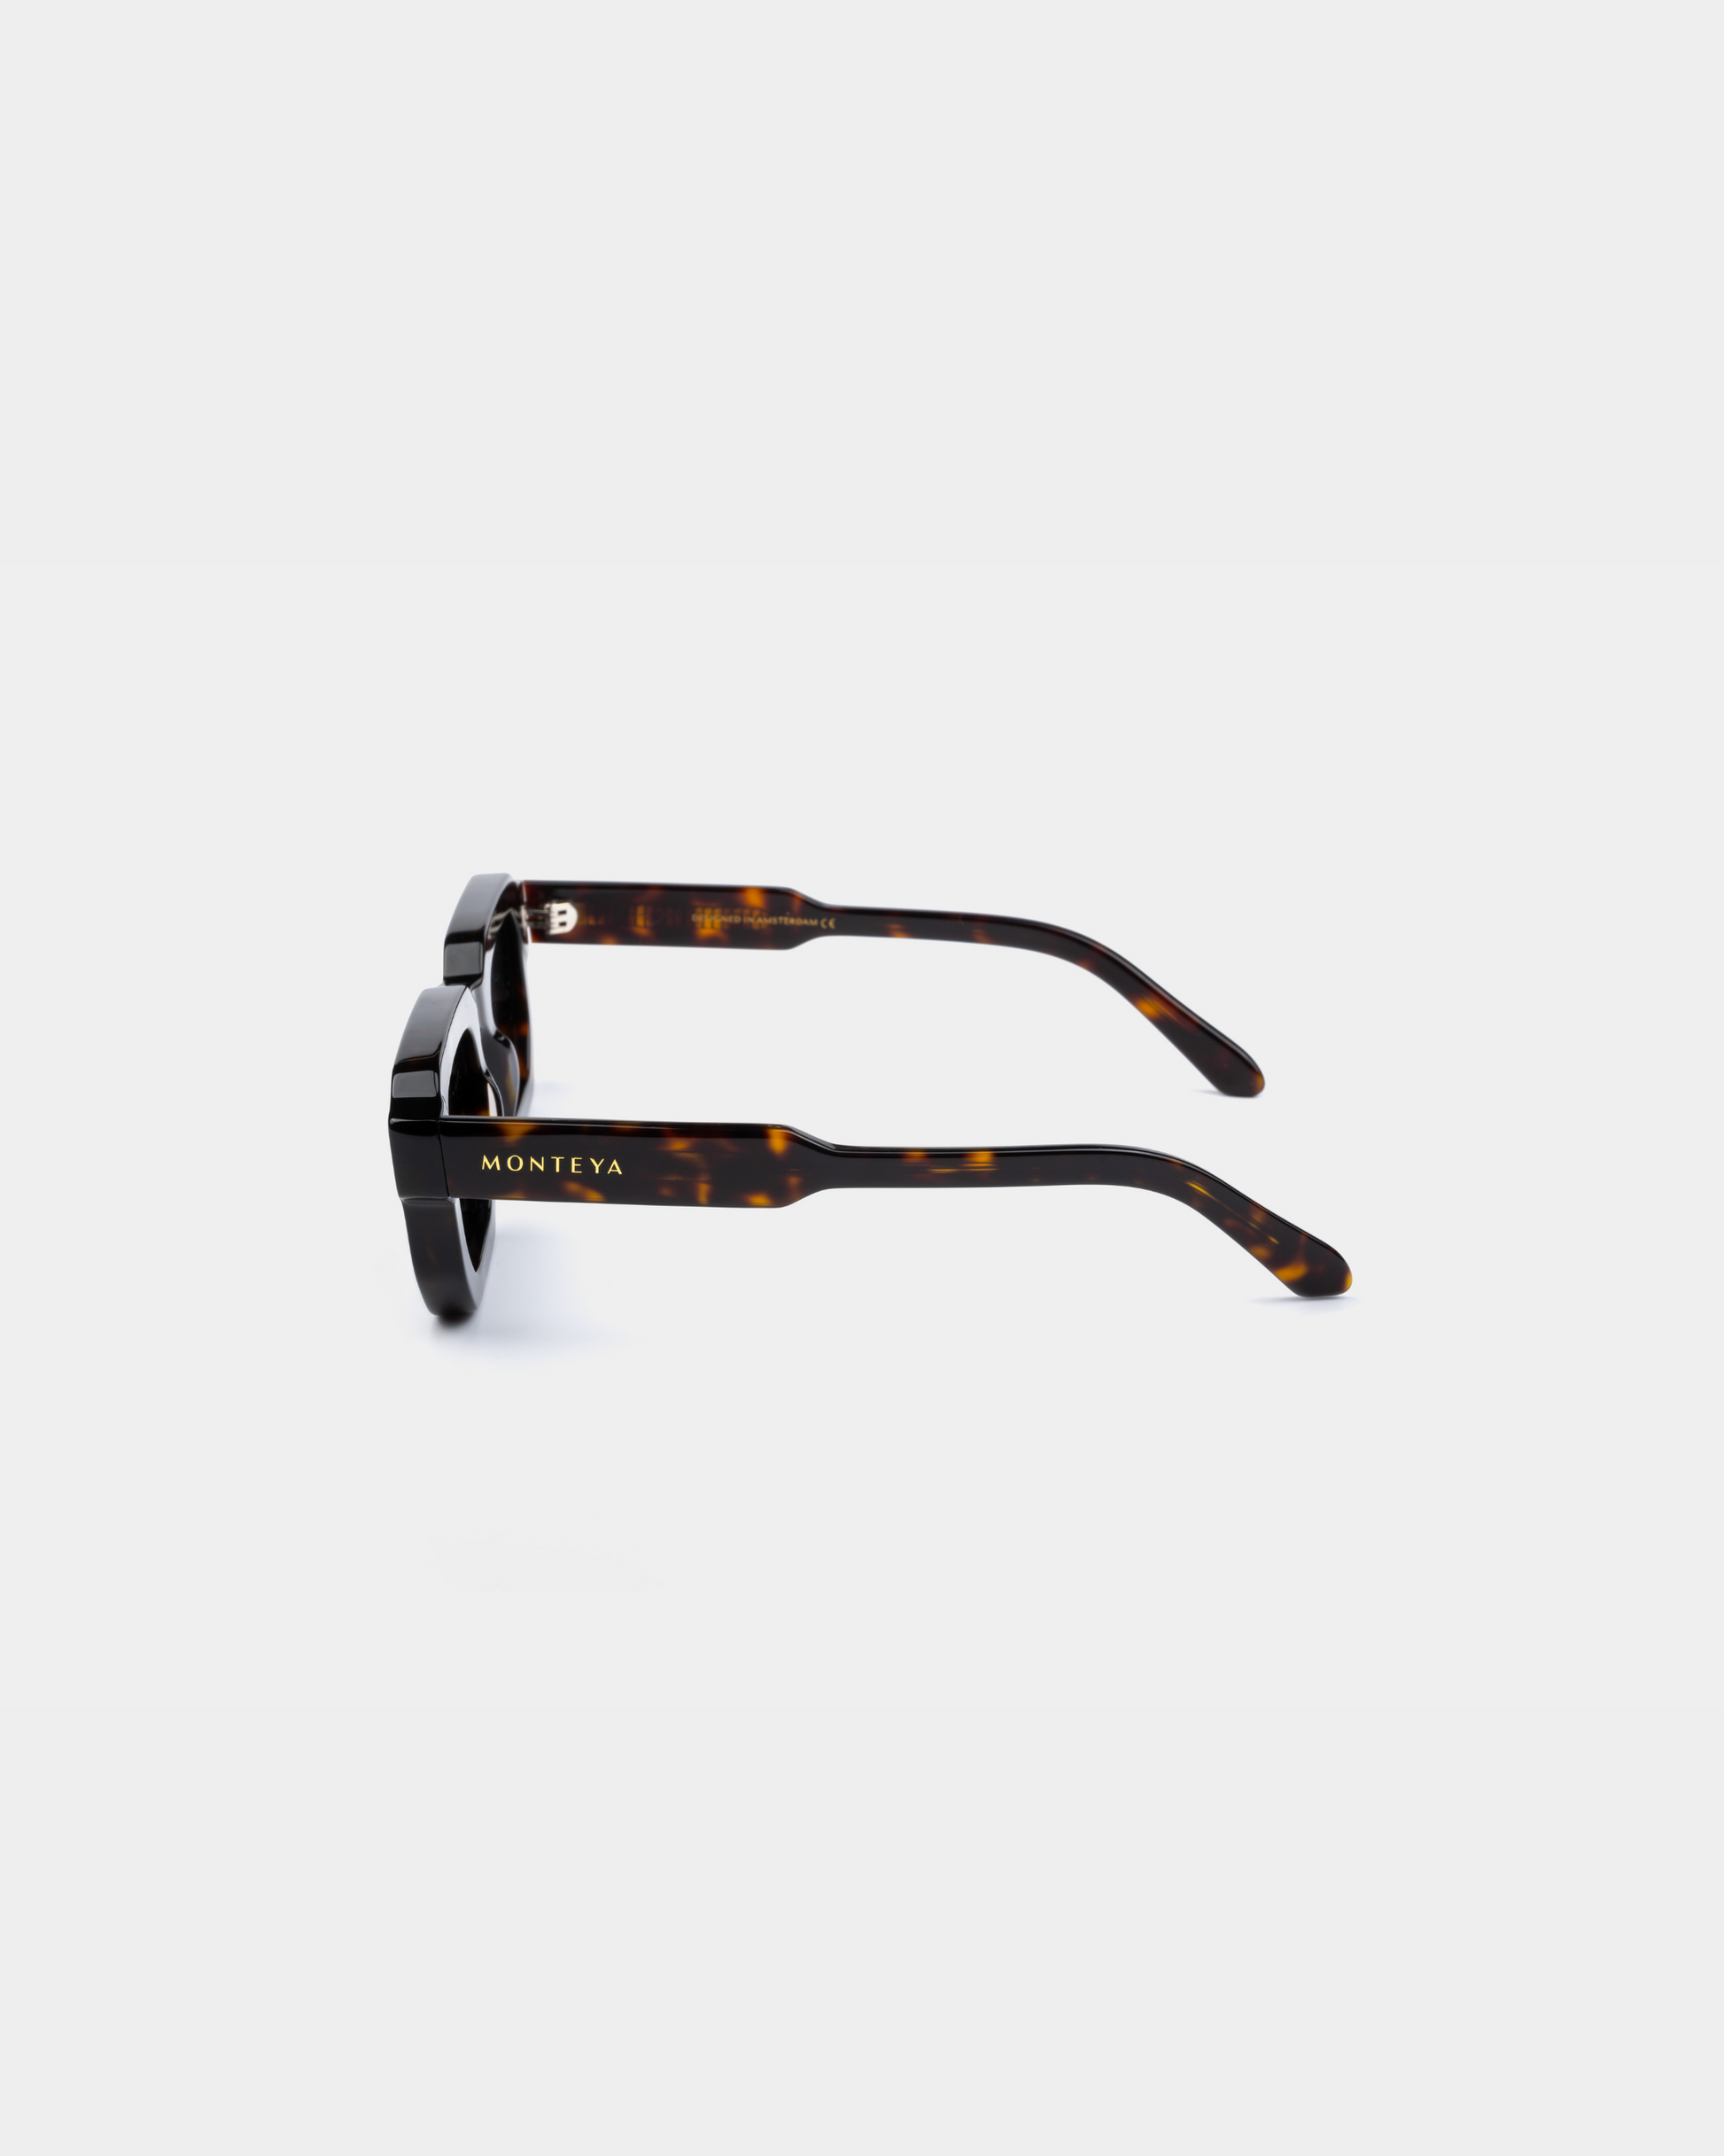 MONTEYA Urban - Leo - Acetate Frame - TAC Polarized Lenses - High End Eyewear - 03